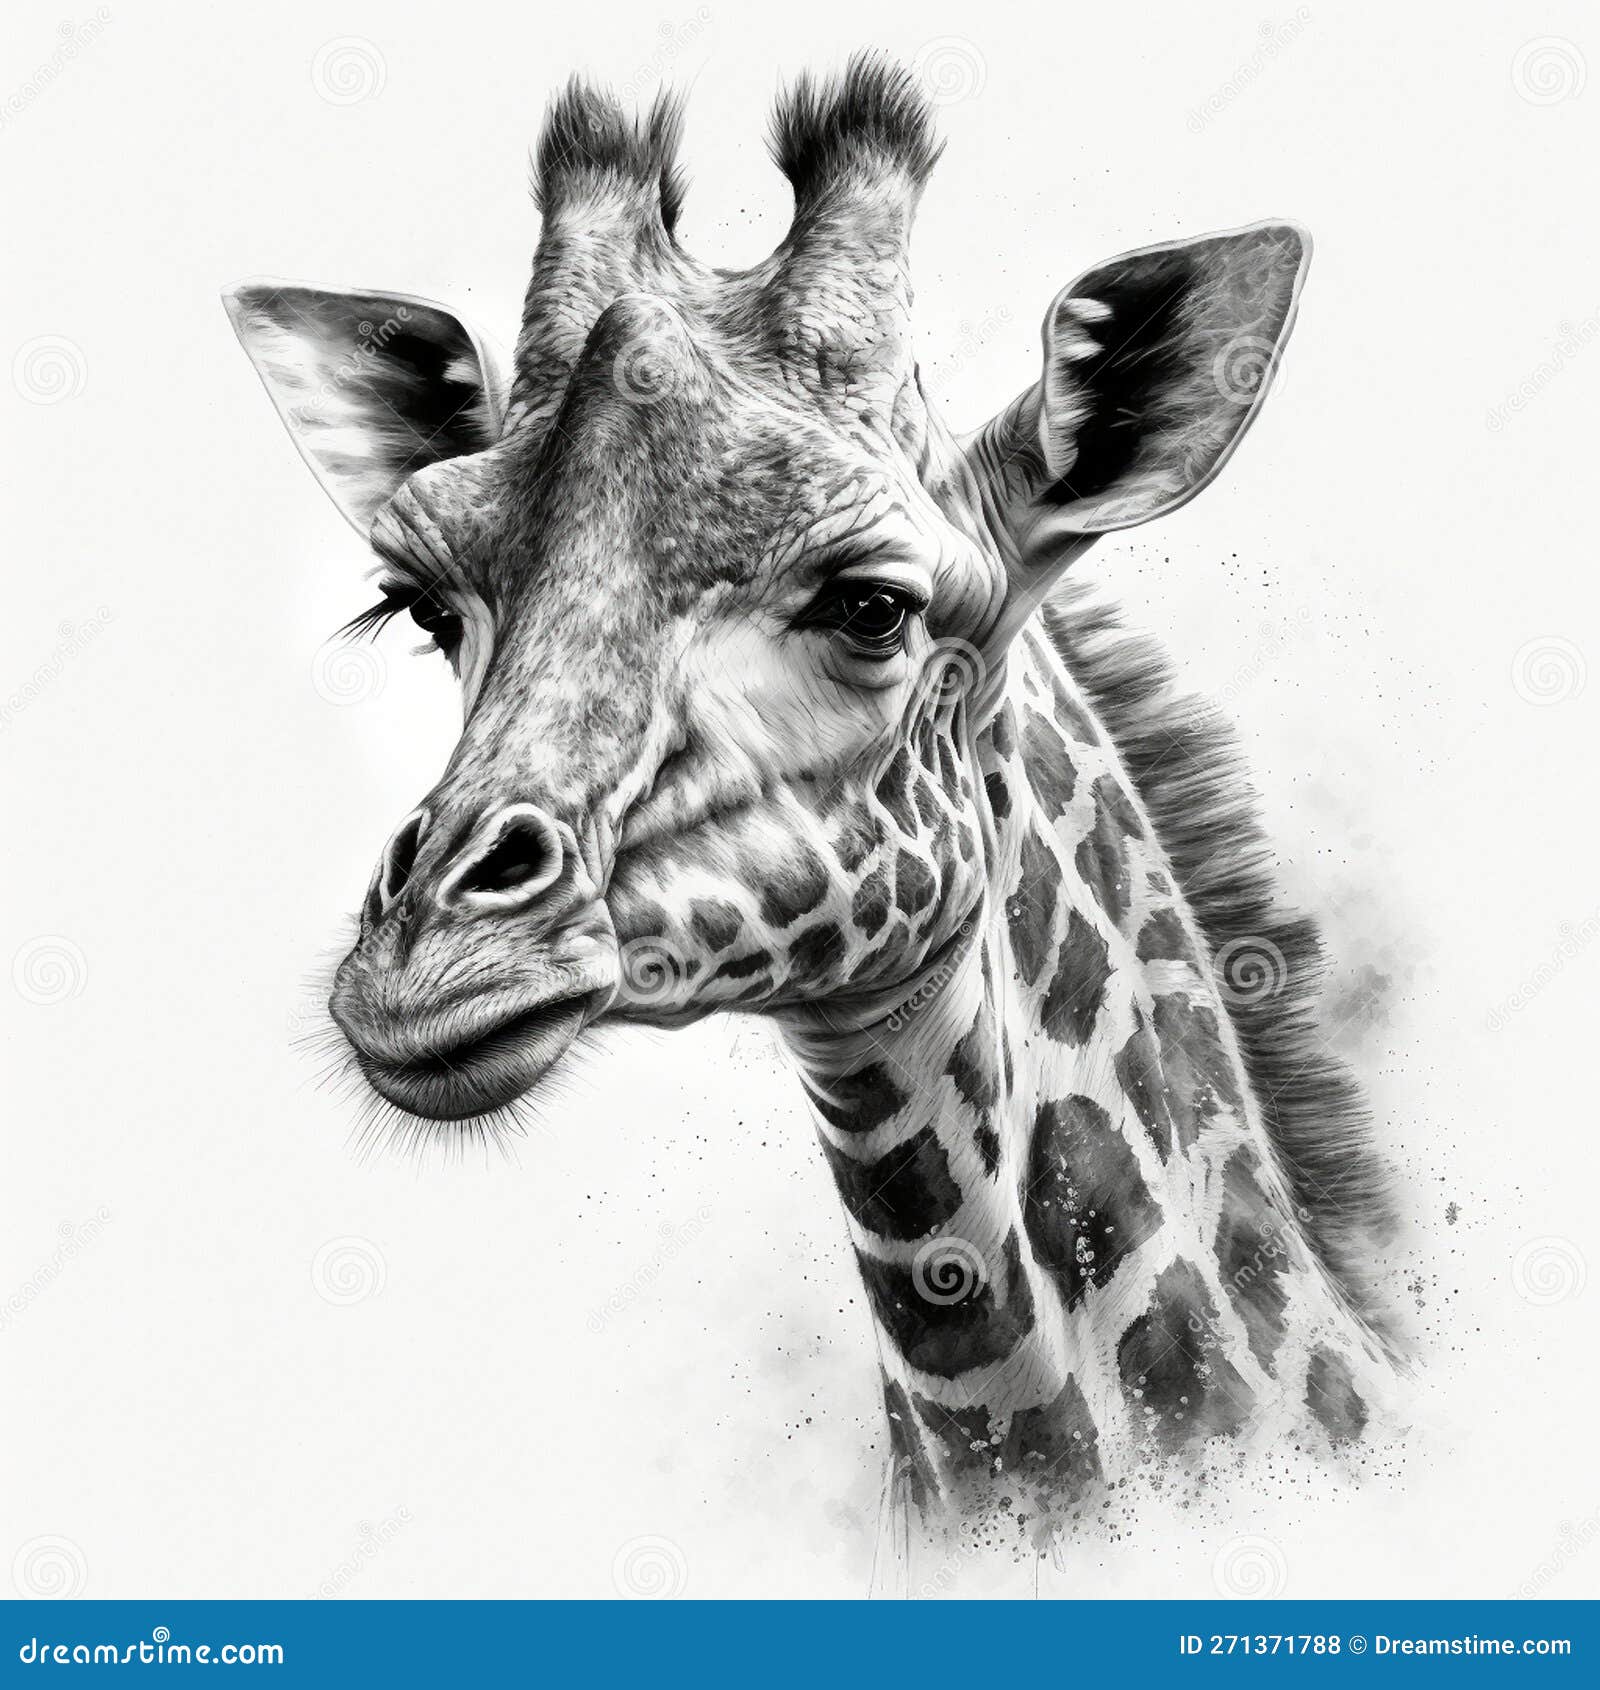 Giraffe Drawings / Sketch by Claudia Luethi alias Abdelghafar - Artist.com-anthinhphatland.vn